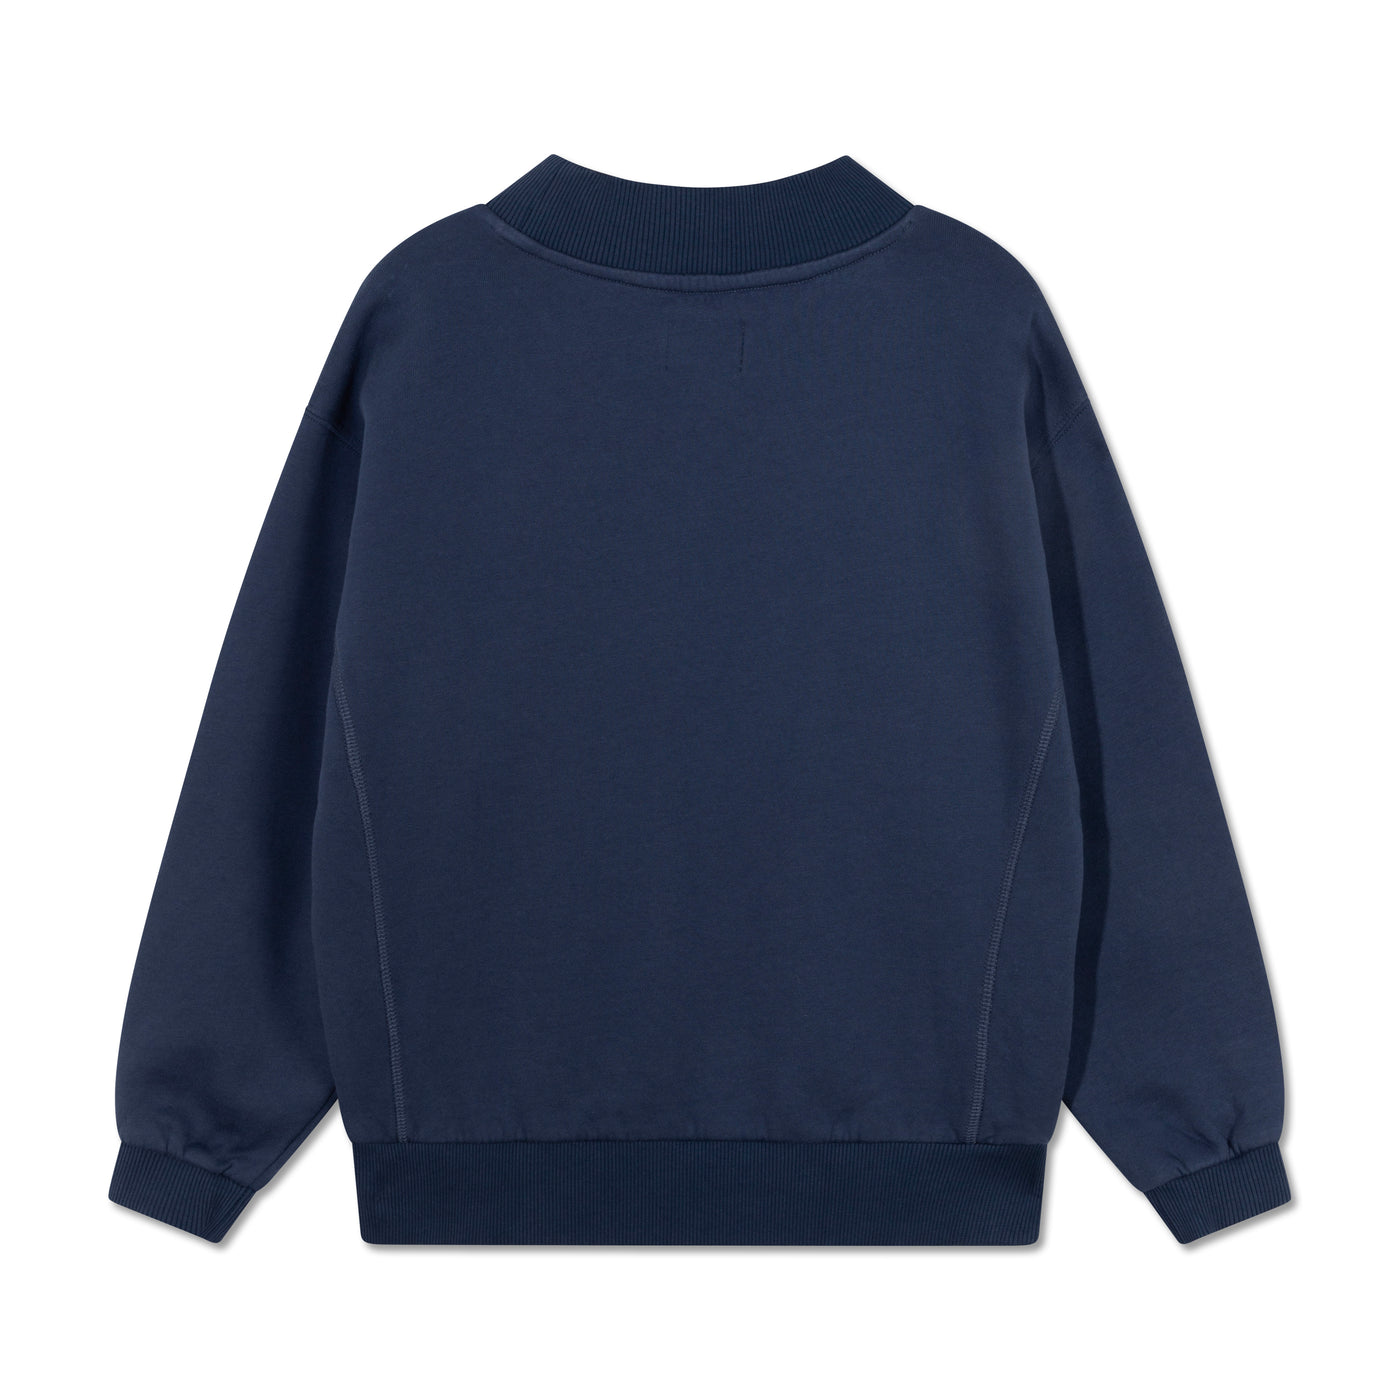 comfy sweater - dark evening blue